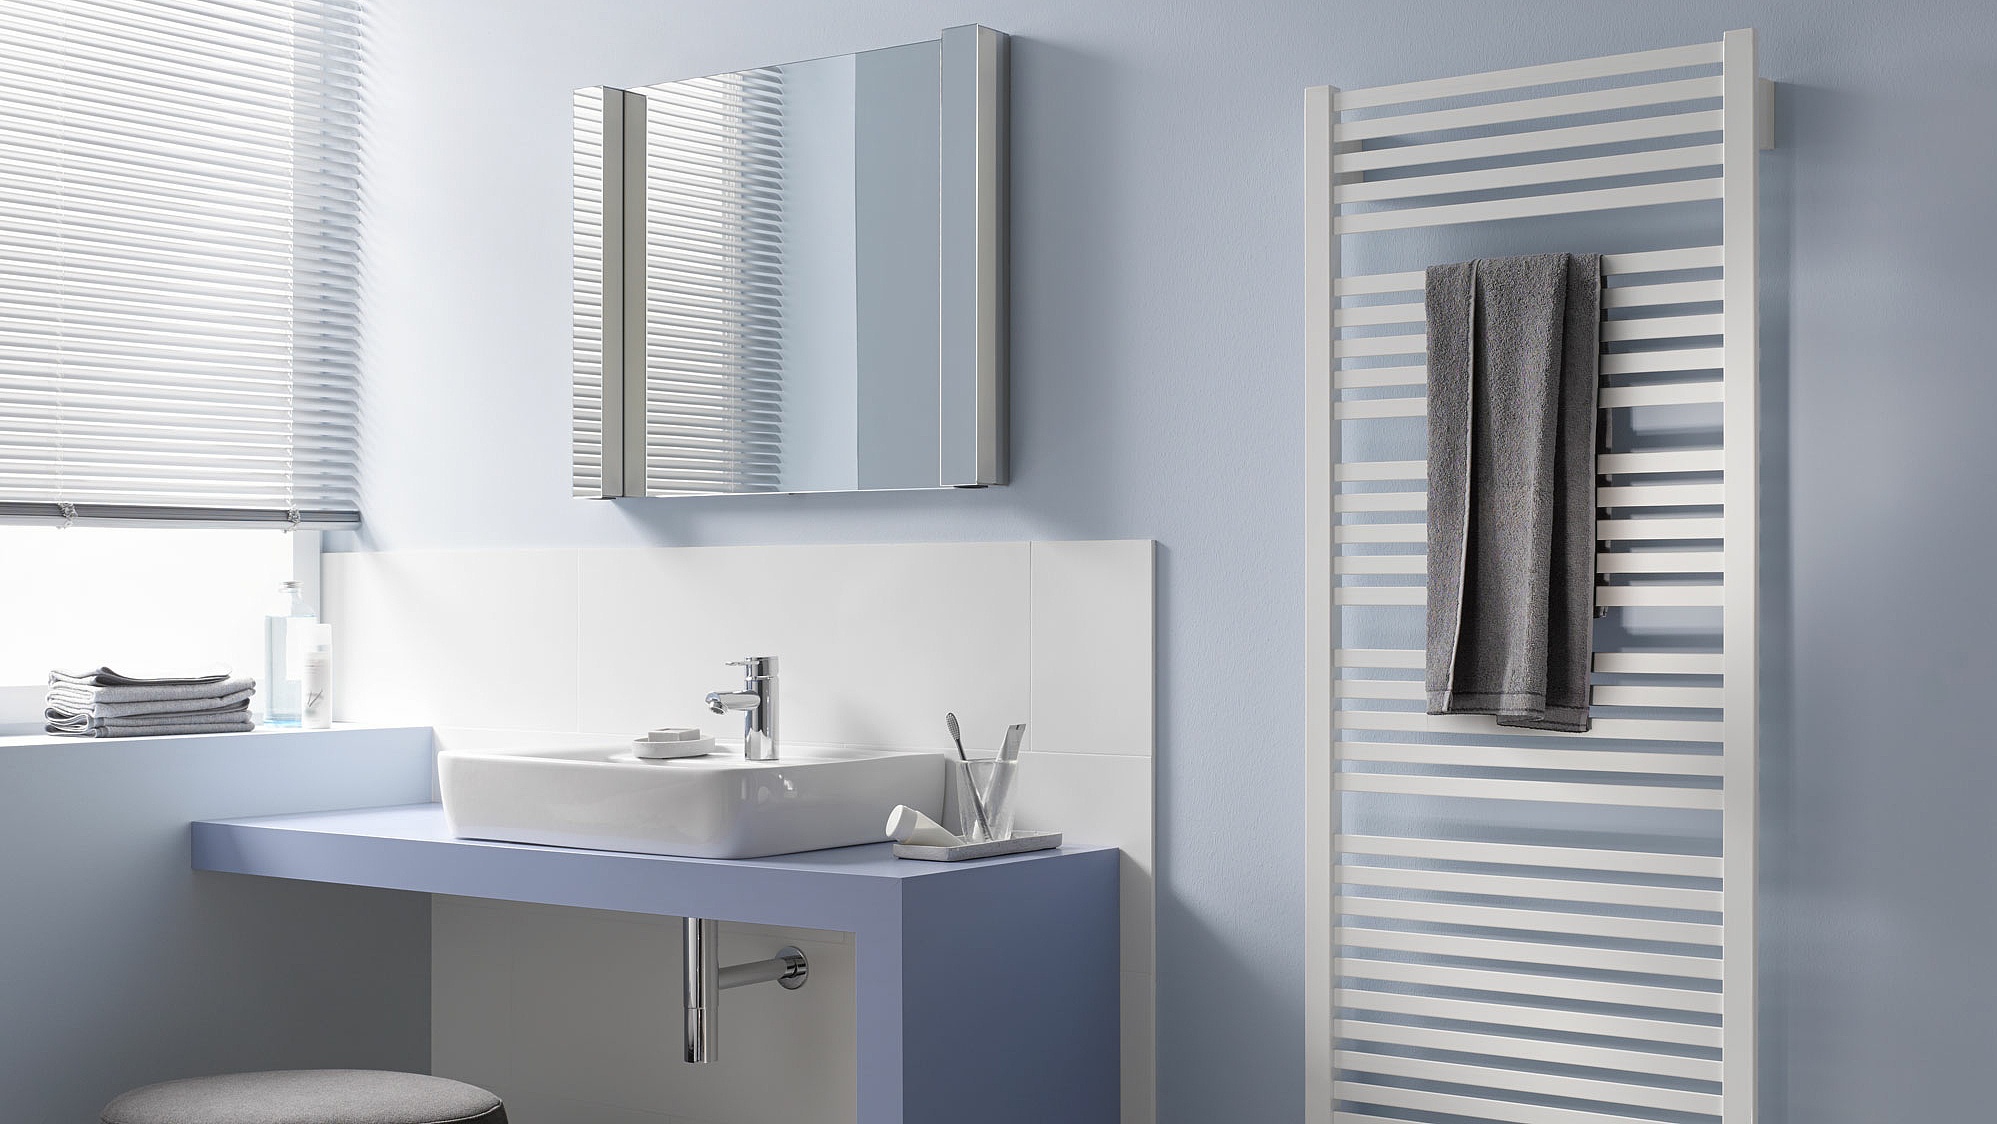 Kermi Credo quadris designer and bathroom radiators feature outstanding flexibility during planning and installation.